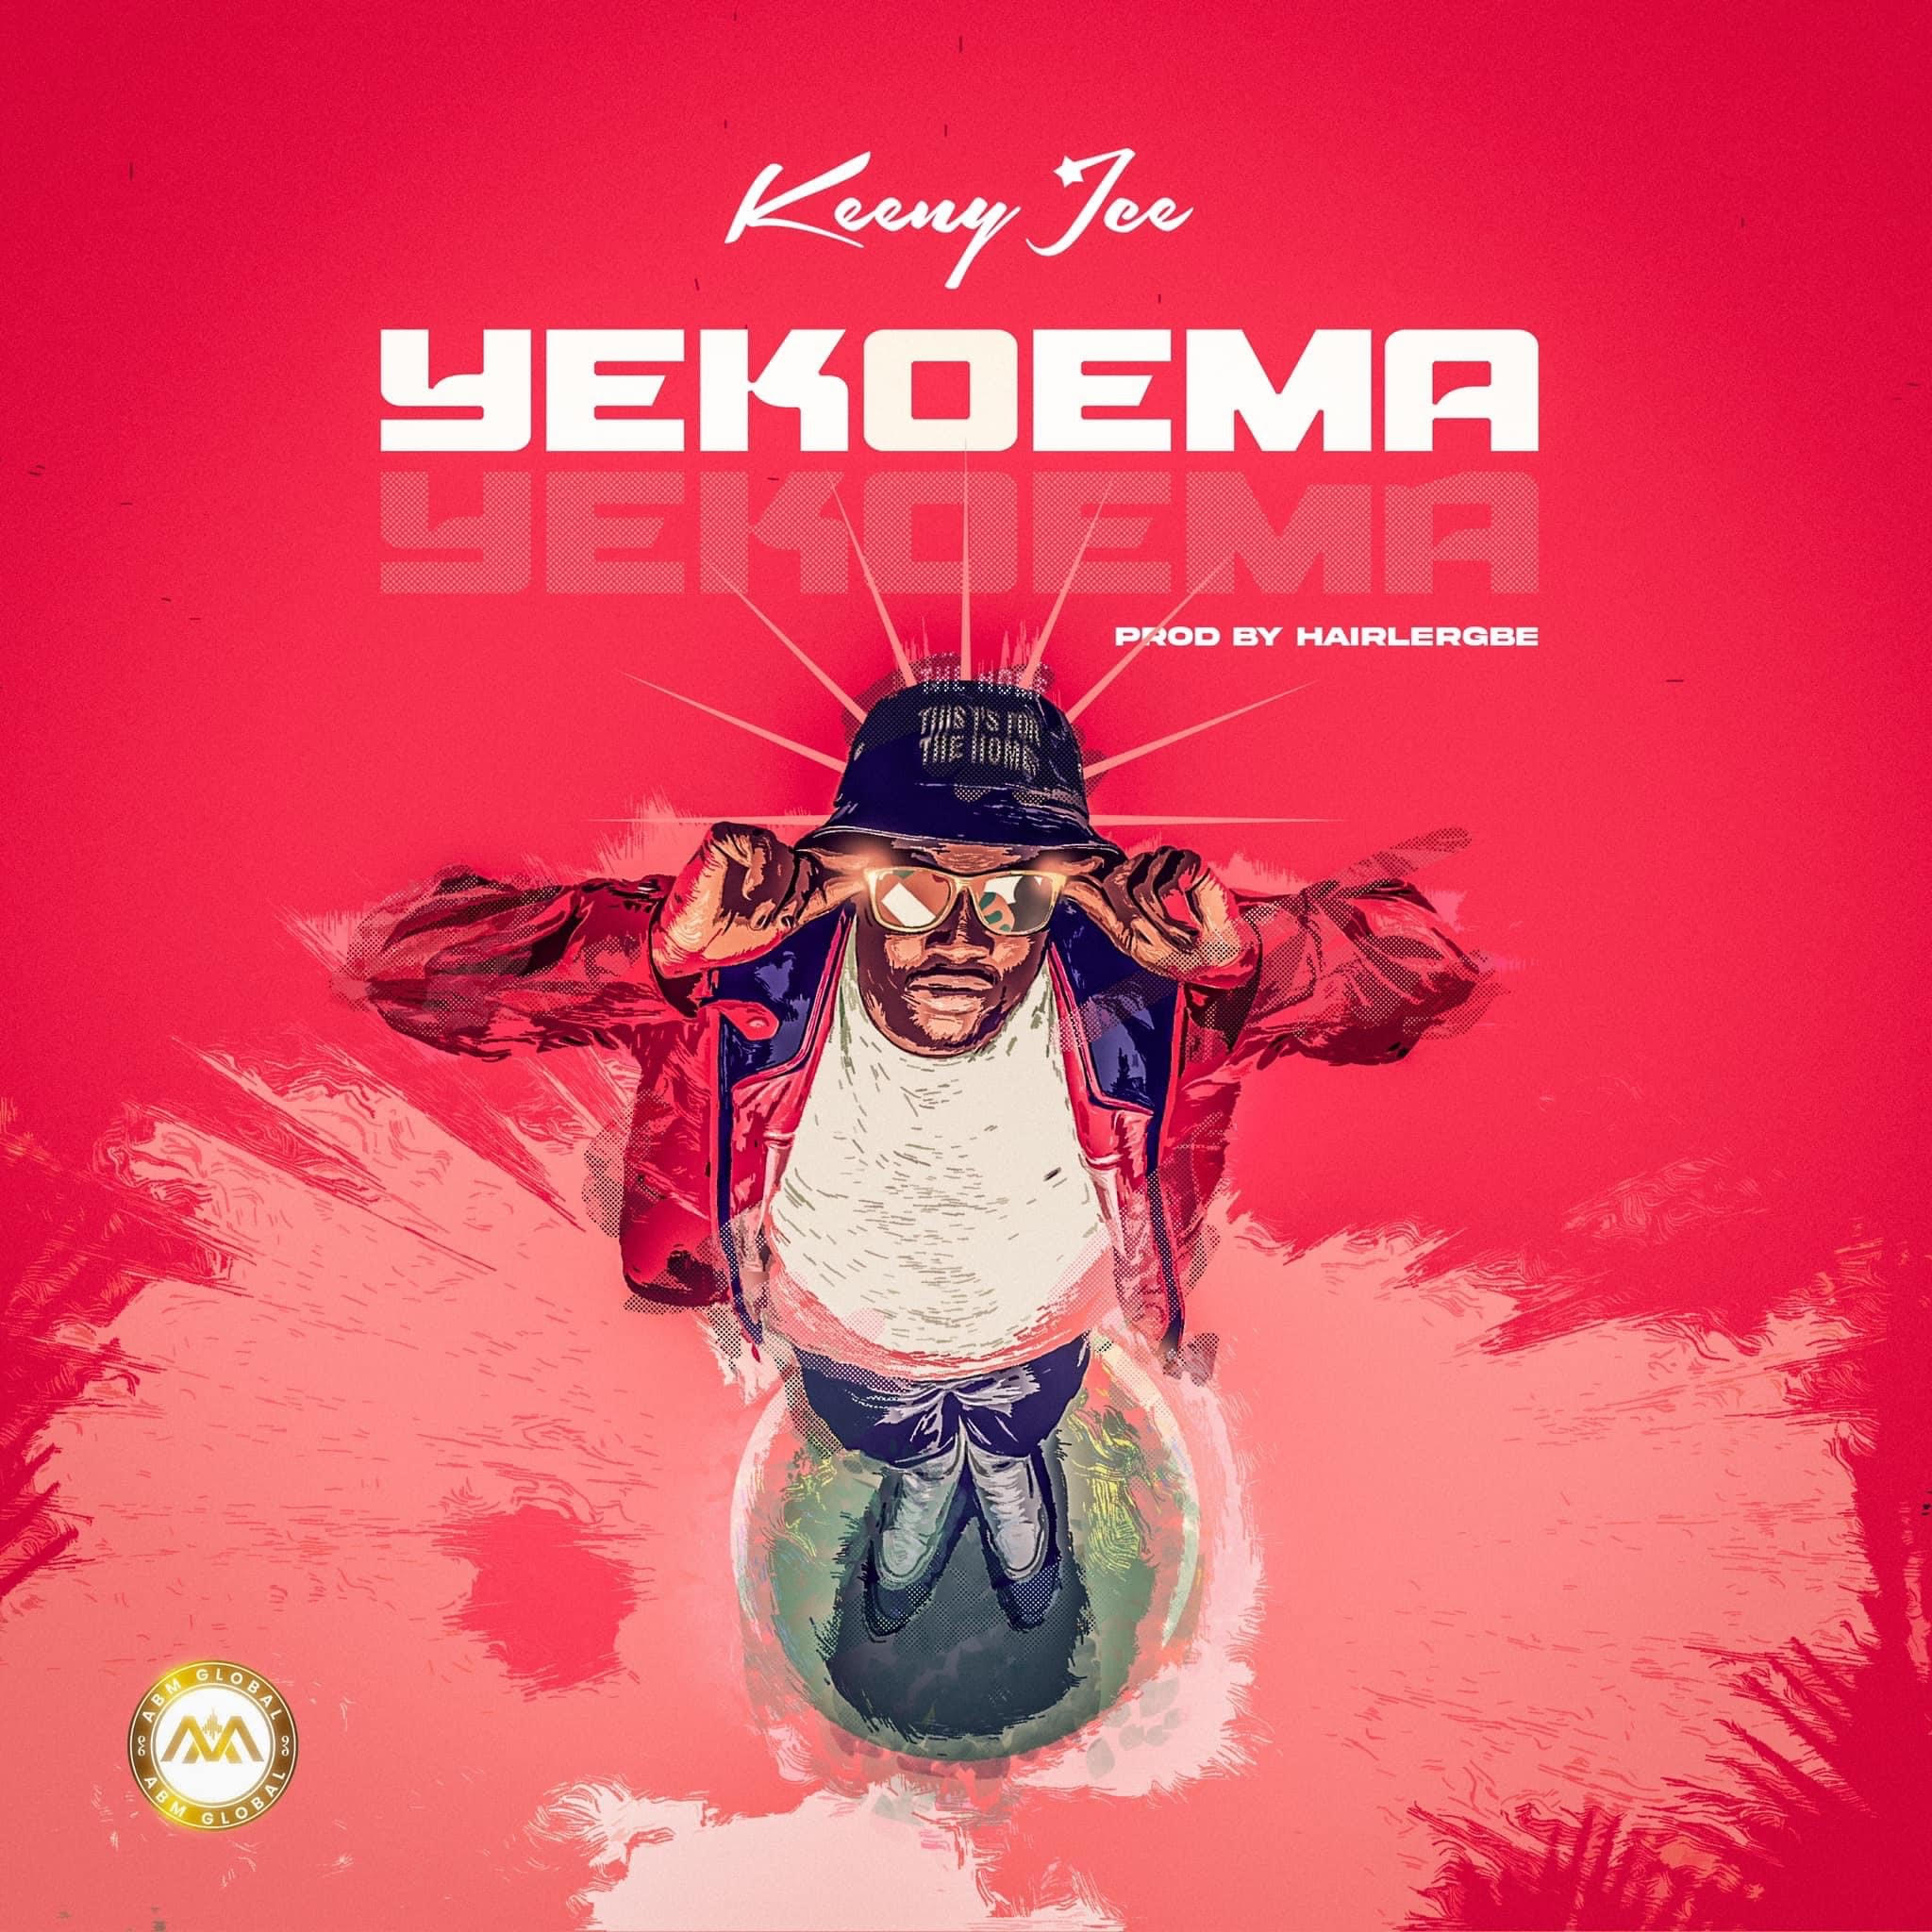 Keeny ice - Yekoema